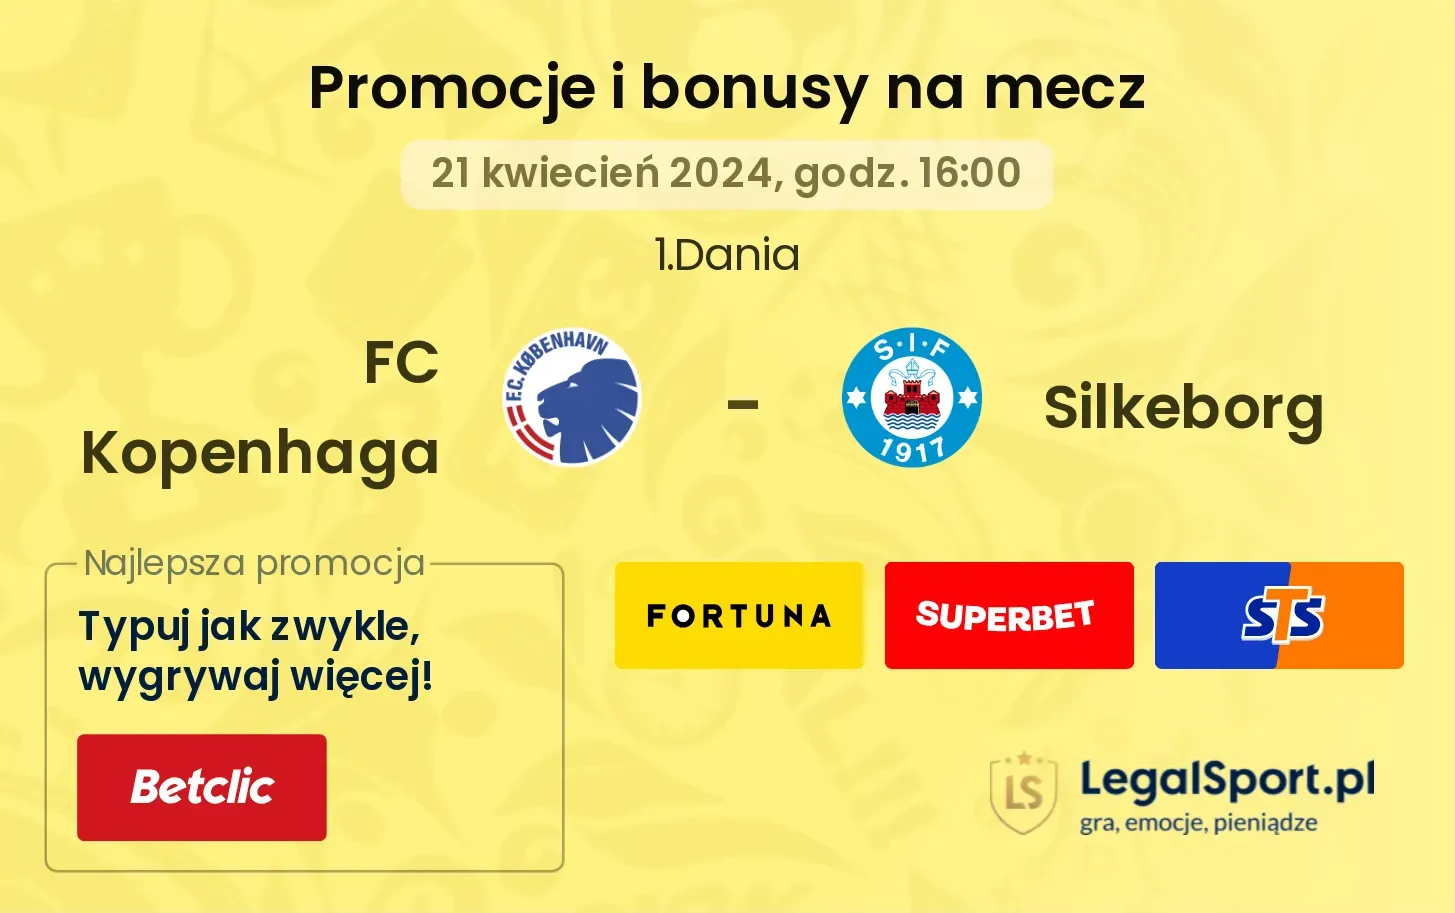 FC Kopenhaga - Silkeborg promocje bonusy na mecz